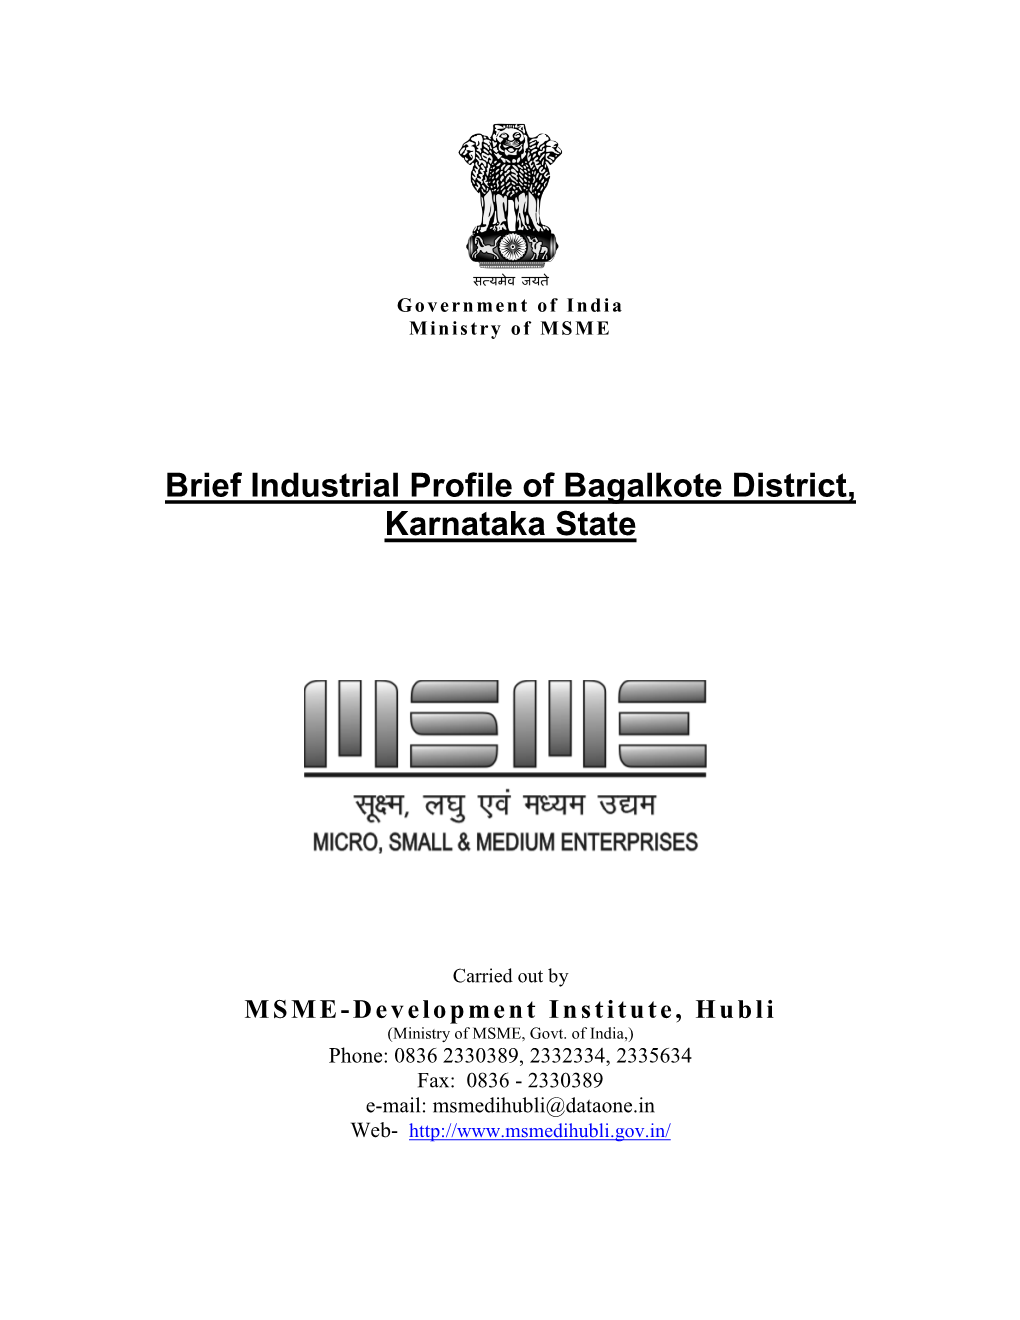 Brief Industrial Profile of Bagalkote District, Karnataka State